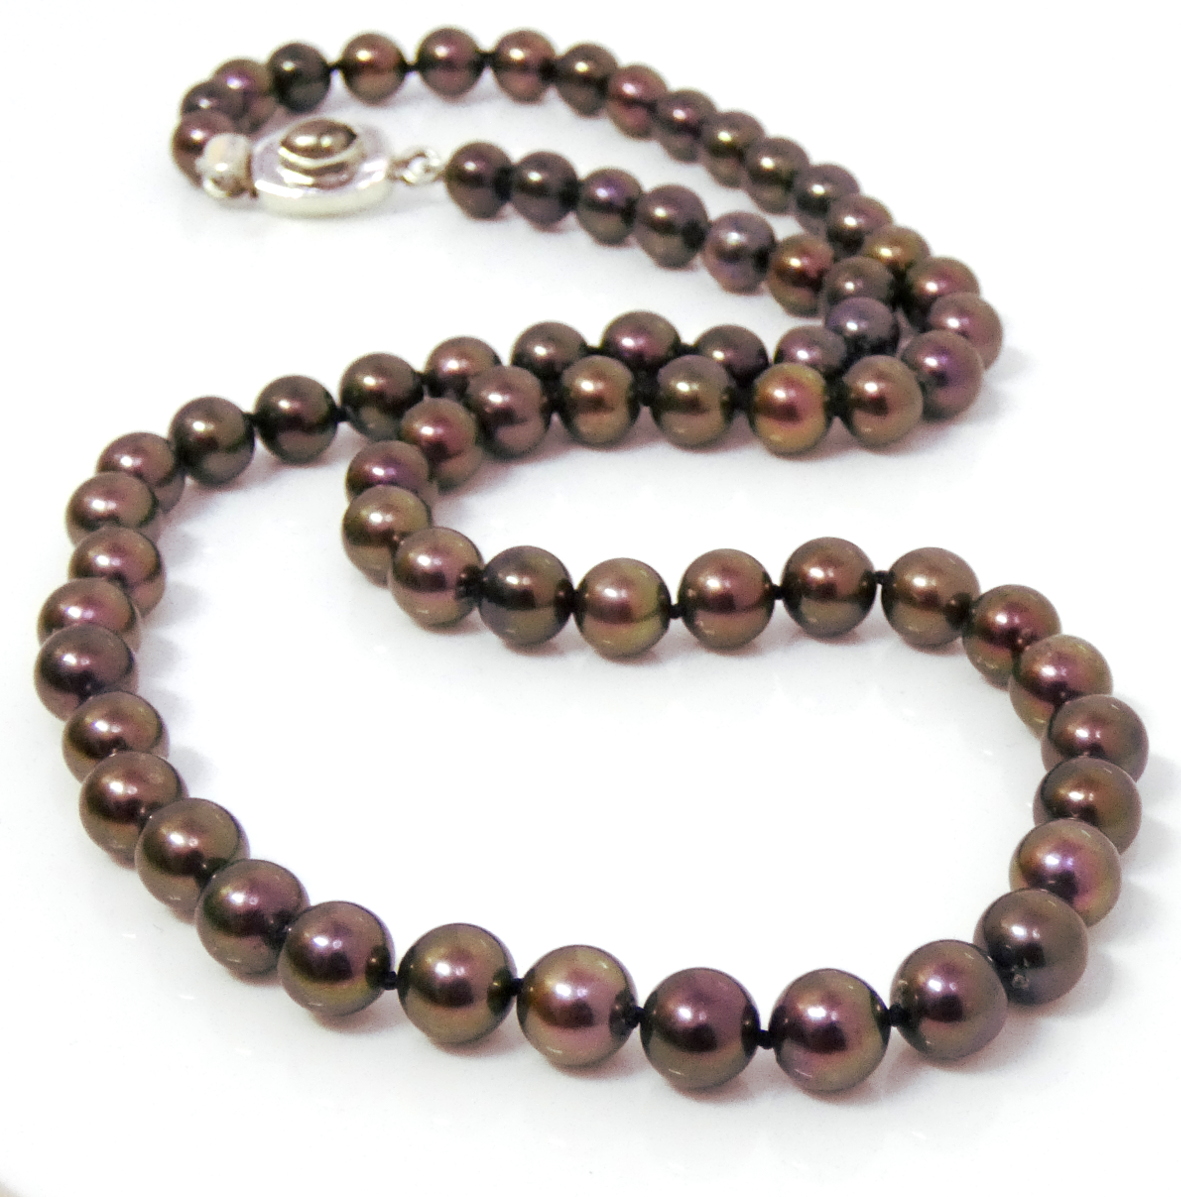 Black/Brown/Aubergine Akoya Pearls Necklace